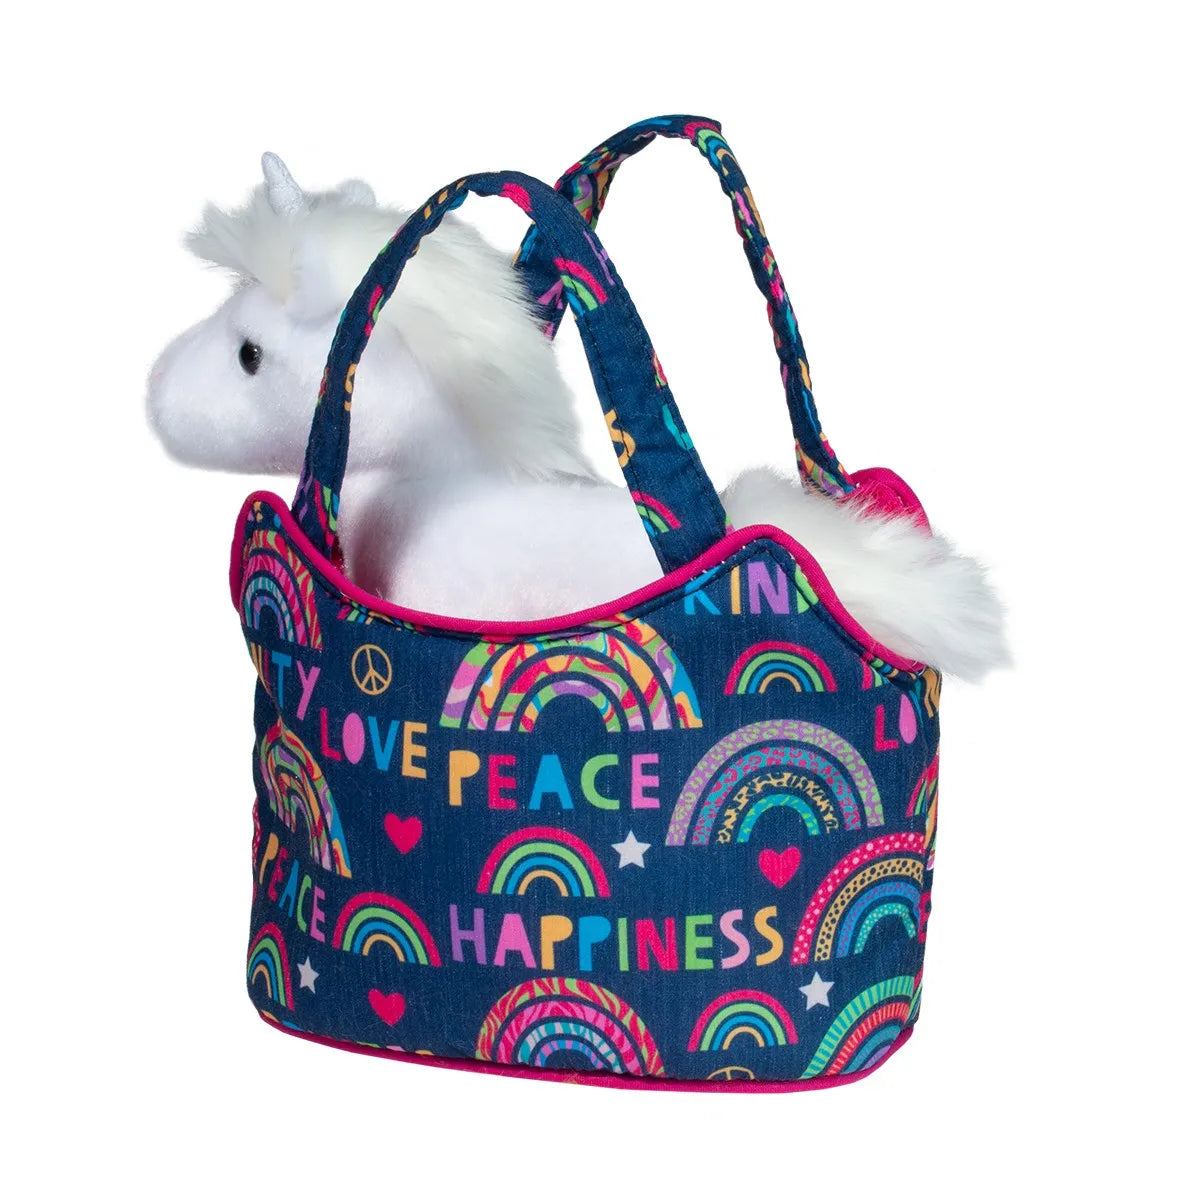 Kindness Sassy Sak with Unicorn| Douglas Toys